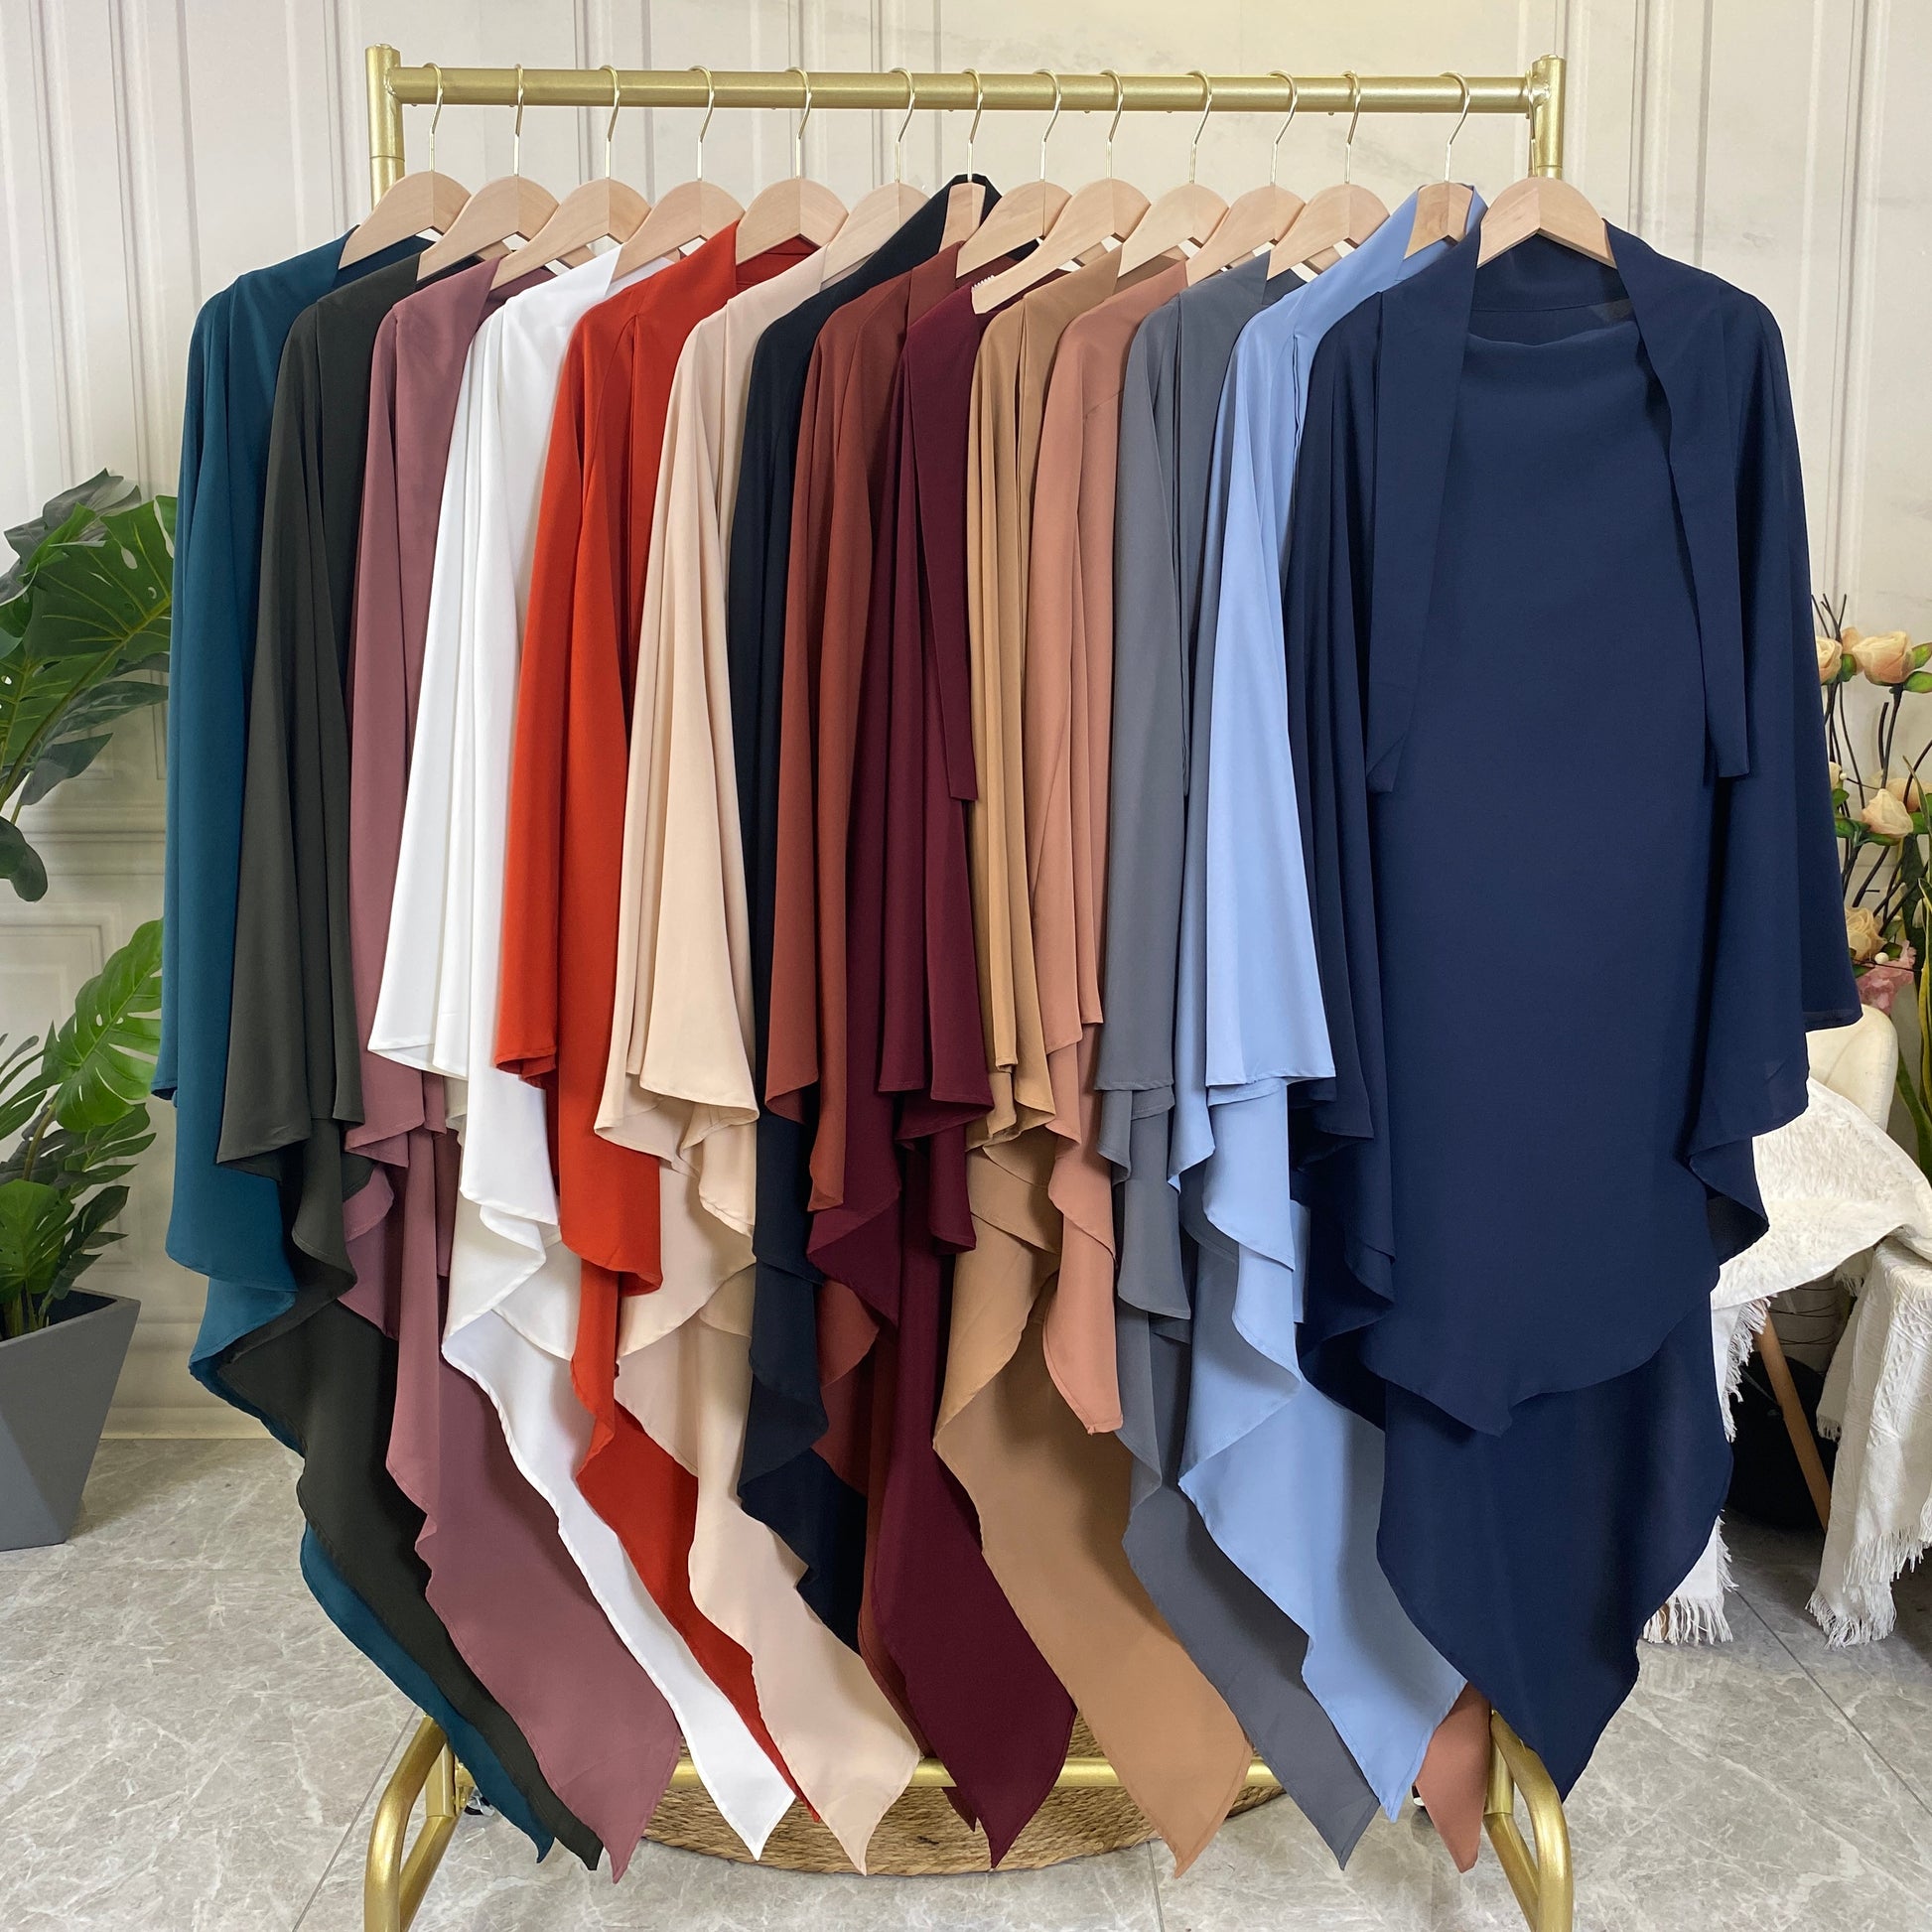 Khimar : Single Layer Triangular Diamond Instant Khimar-Hijab-Jilbab for Girls & Women in Single Layer Light Navy Blue Color | Tie Back Burkha Jilbab Khimar Style Abaya Hijab Niqab Islamic Modest Wear